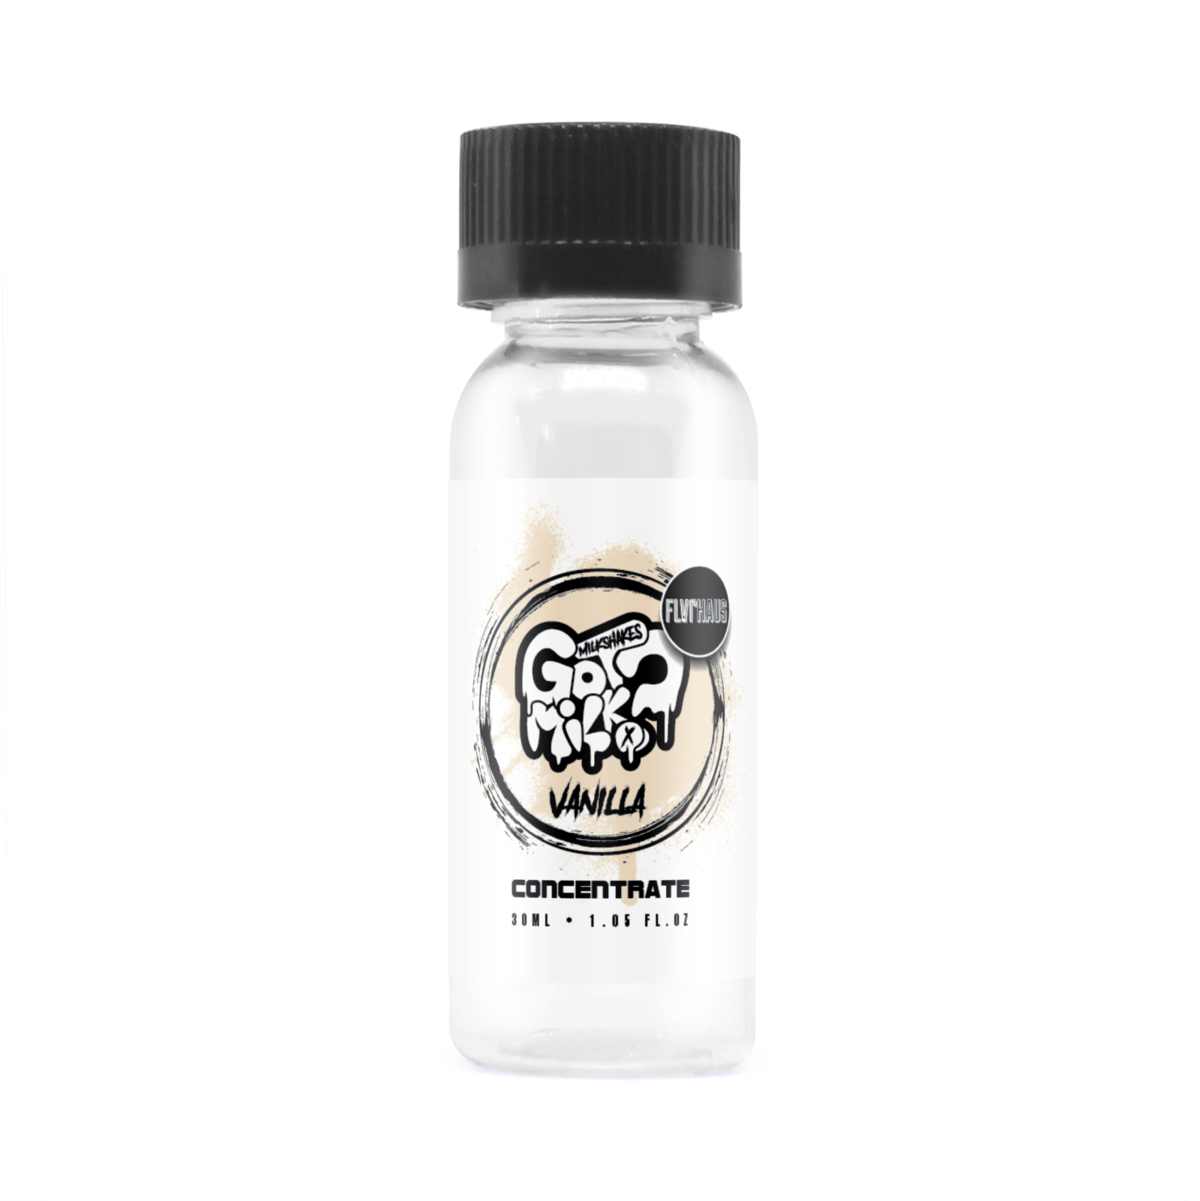 Vanilla Milkshake Concentrate E-liquid by Got Milk 30ml